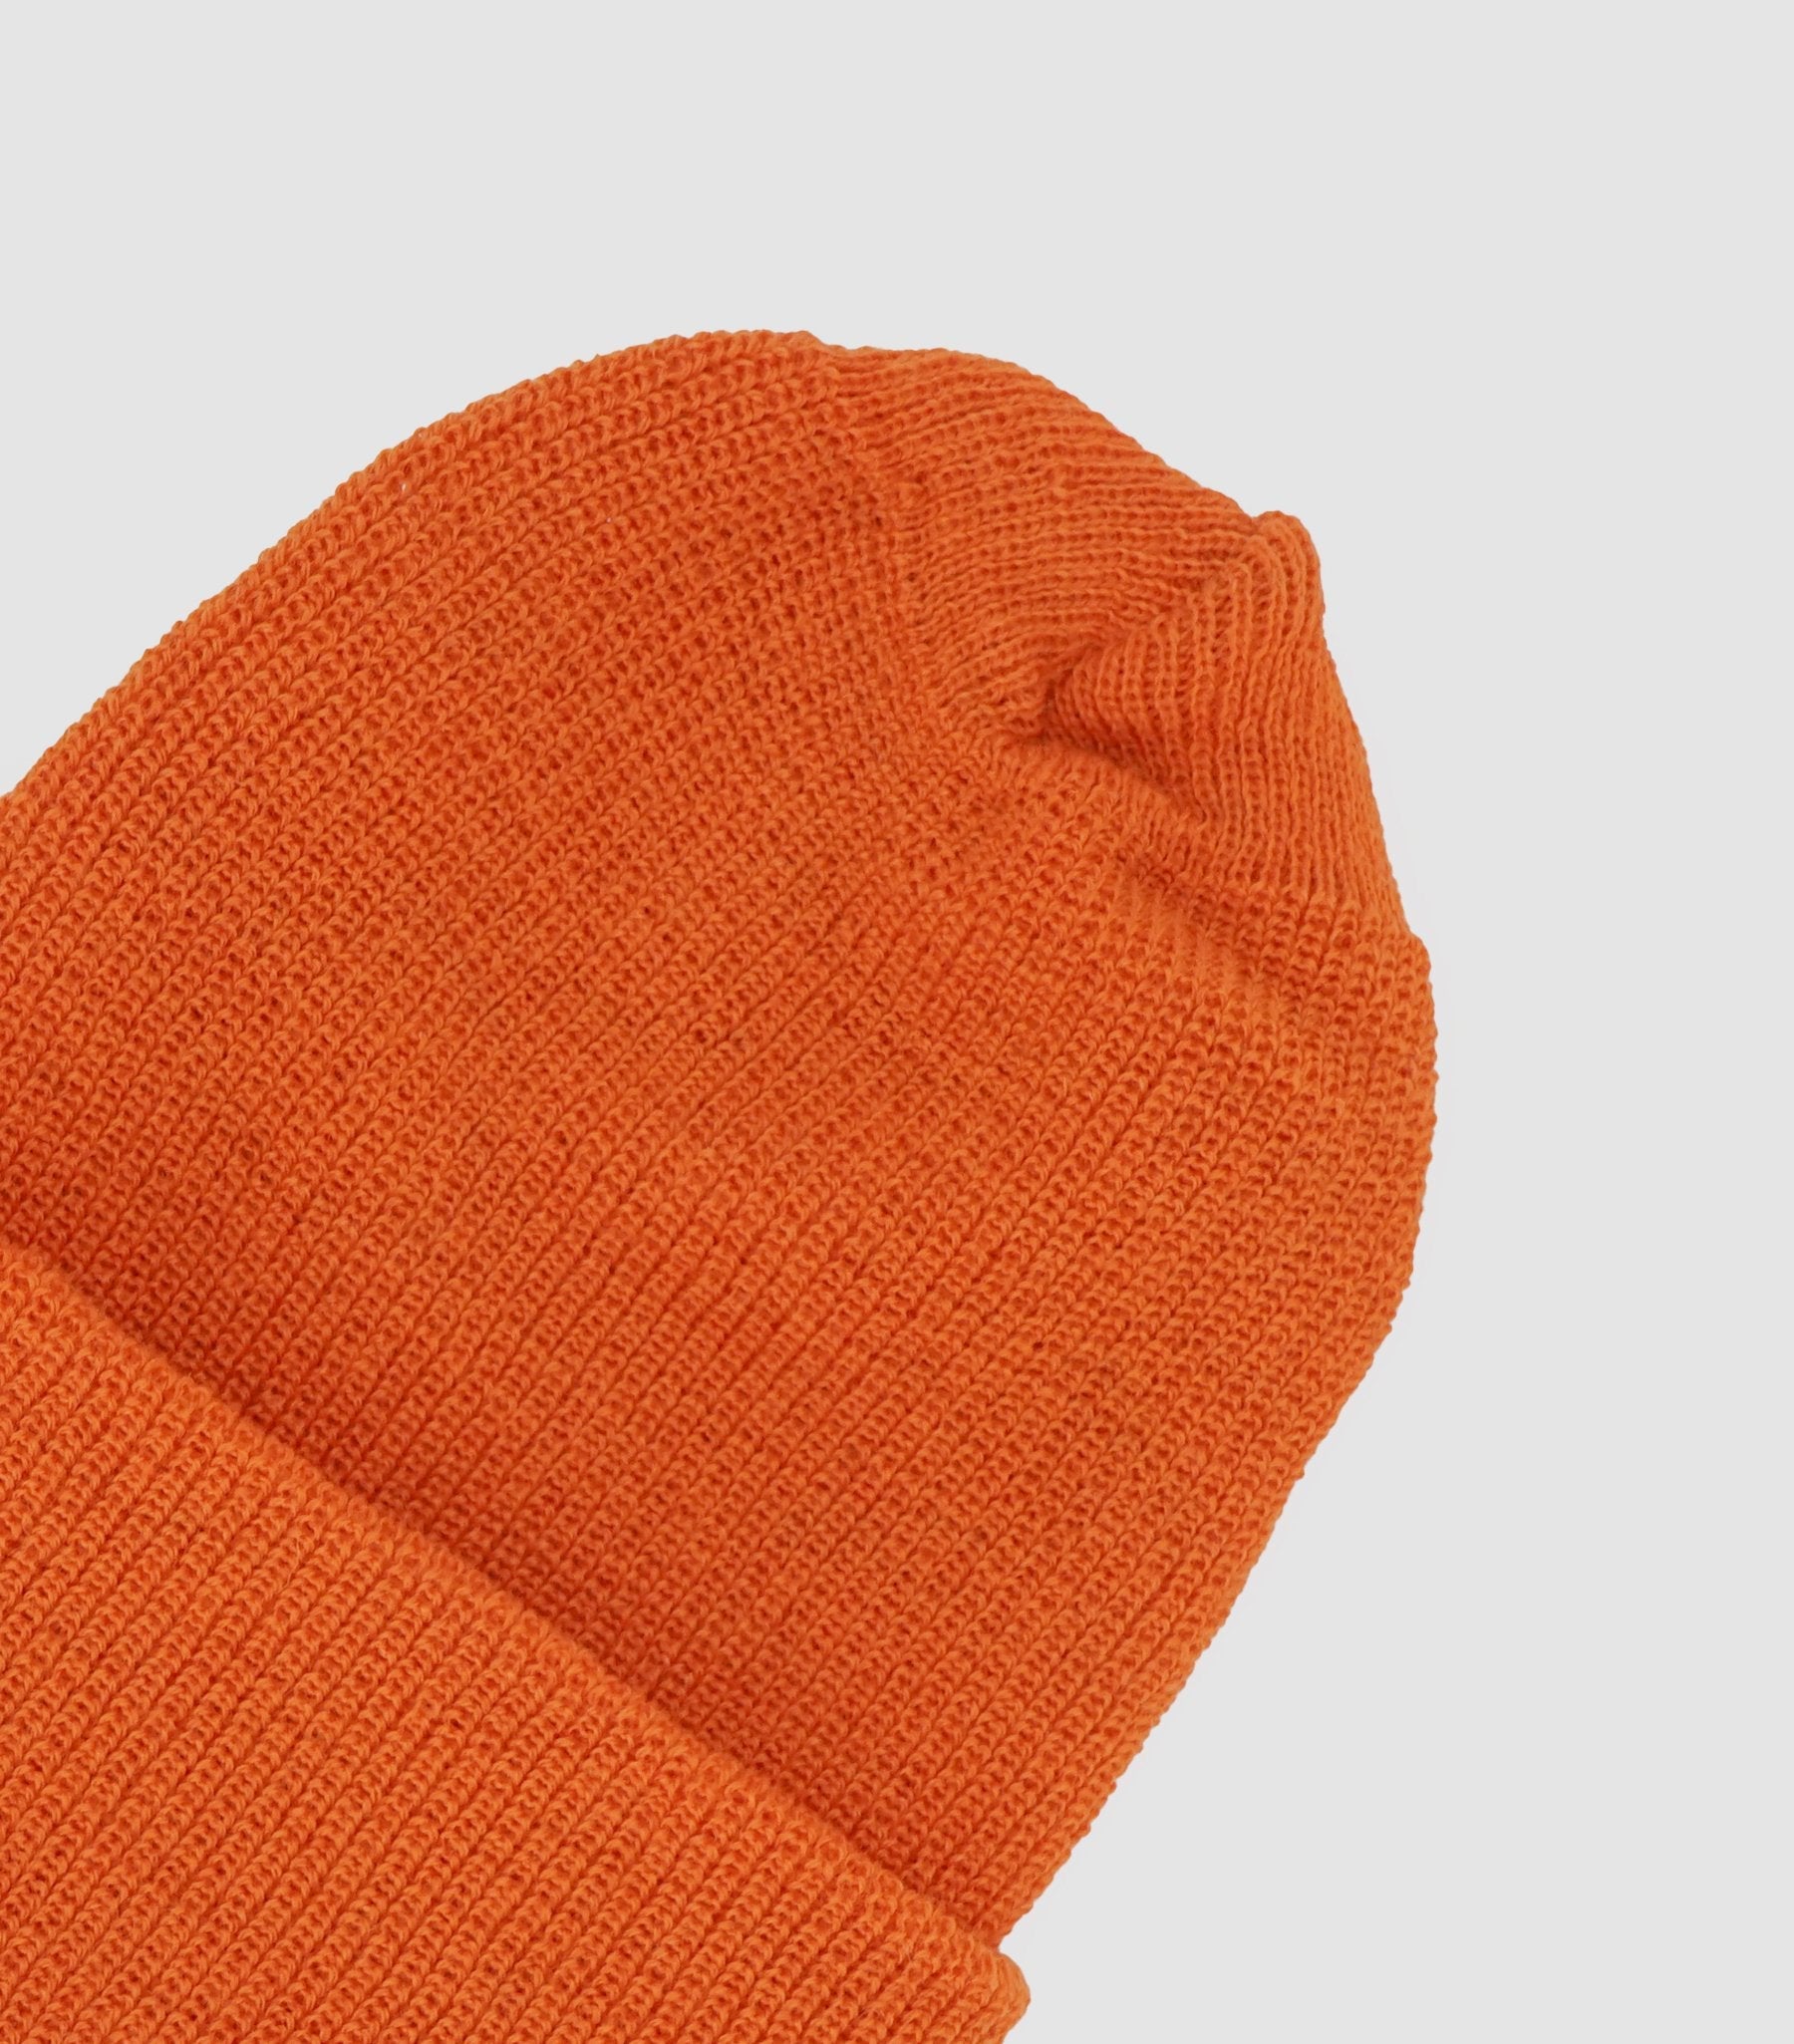 Made in USA Wool Watch Cap/ Orange